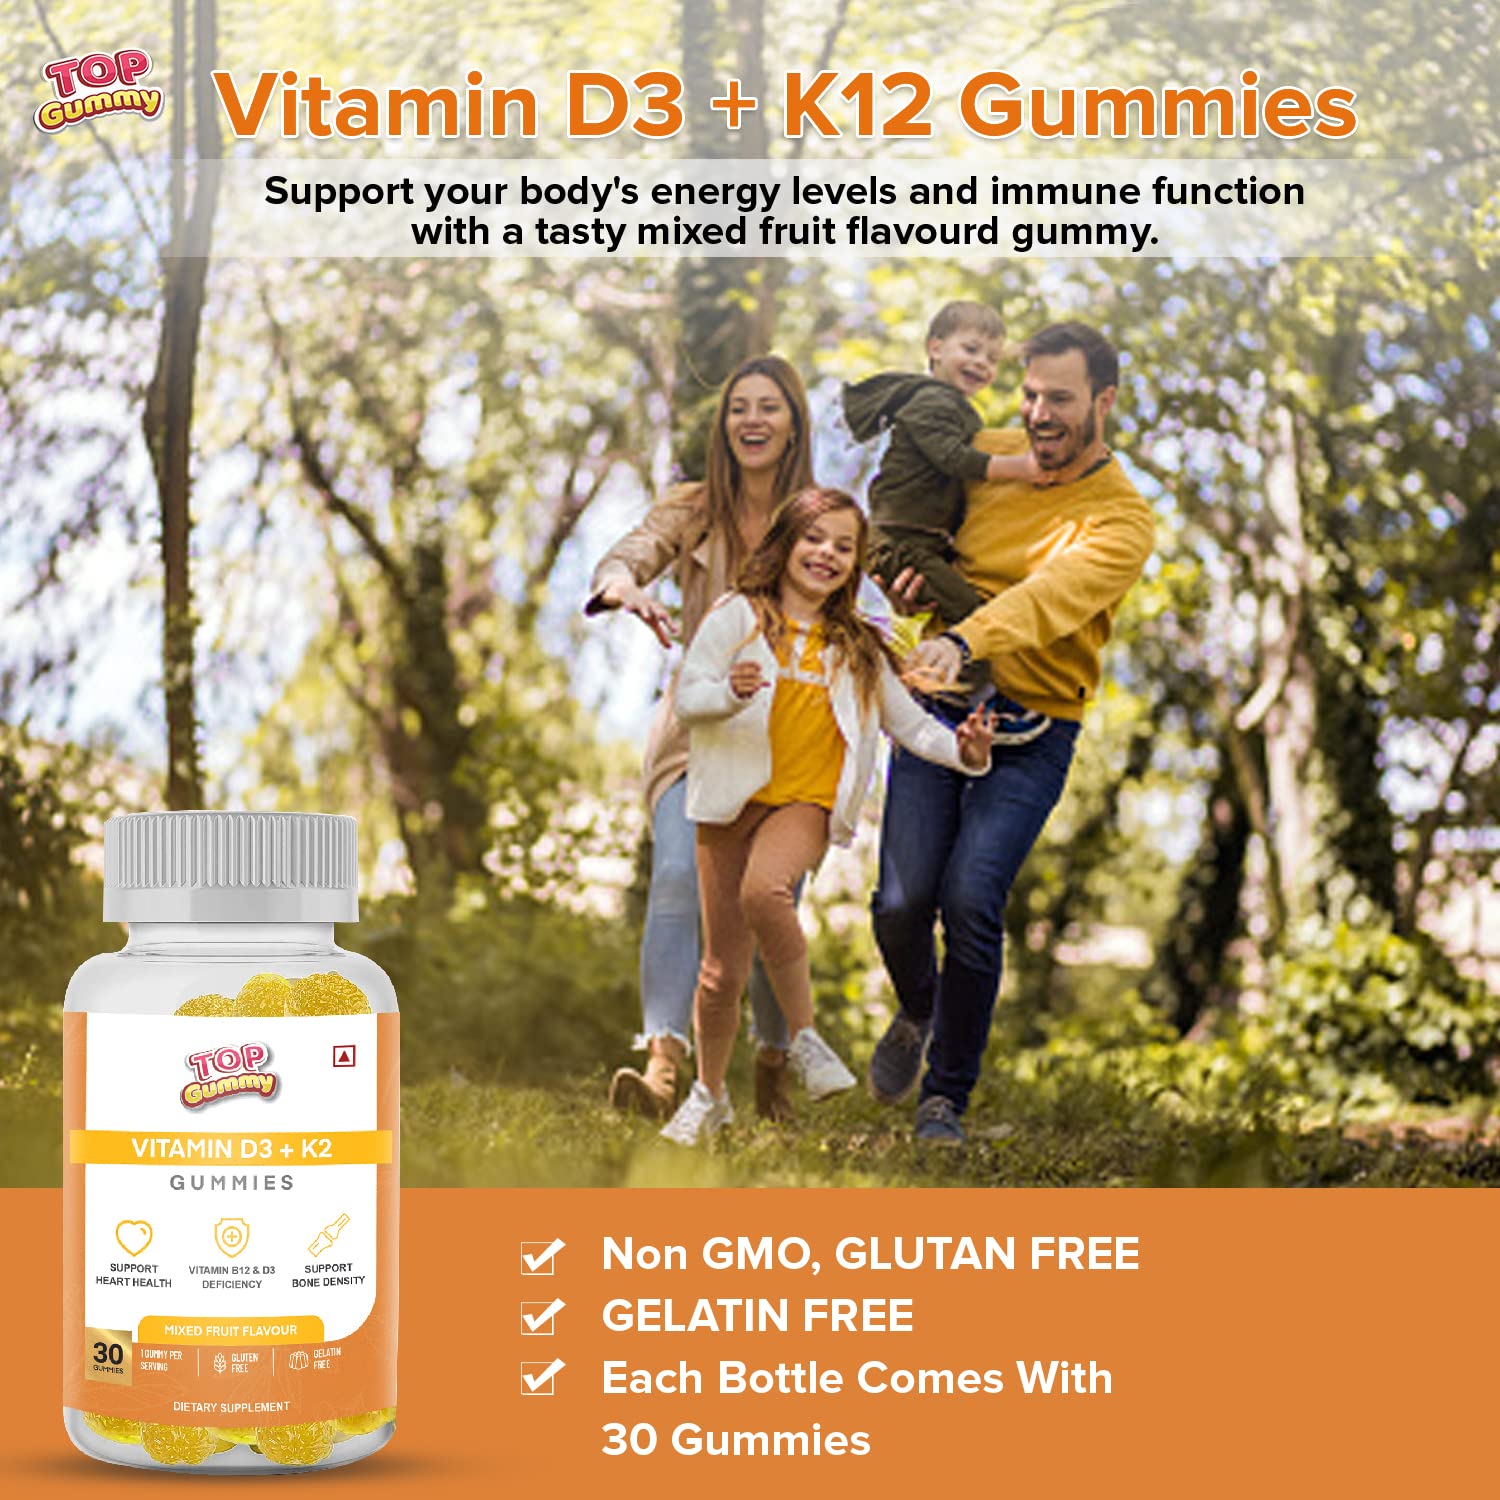 Top Gummy Vitamin D3 + K2 Gummies with Mixed Fruit Flavour| Supports Heart Health |Vitamin D3 & K2 Deficiency| Improves Bone Density - 30 Gummies, Gluten-Free, Gelatine-Free, Non-GMO (Pack of 3)